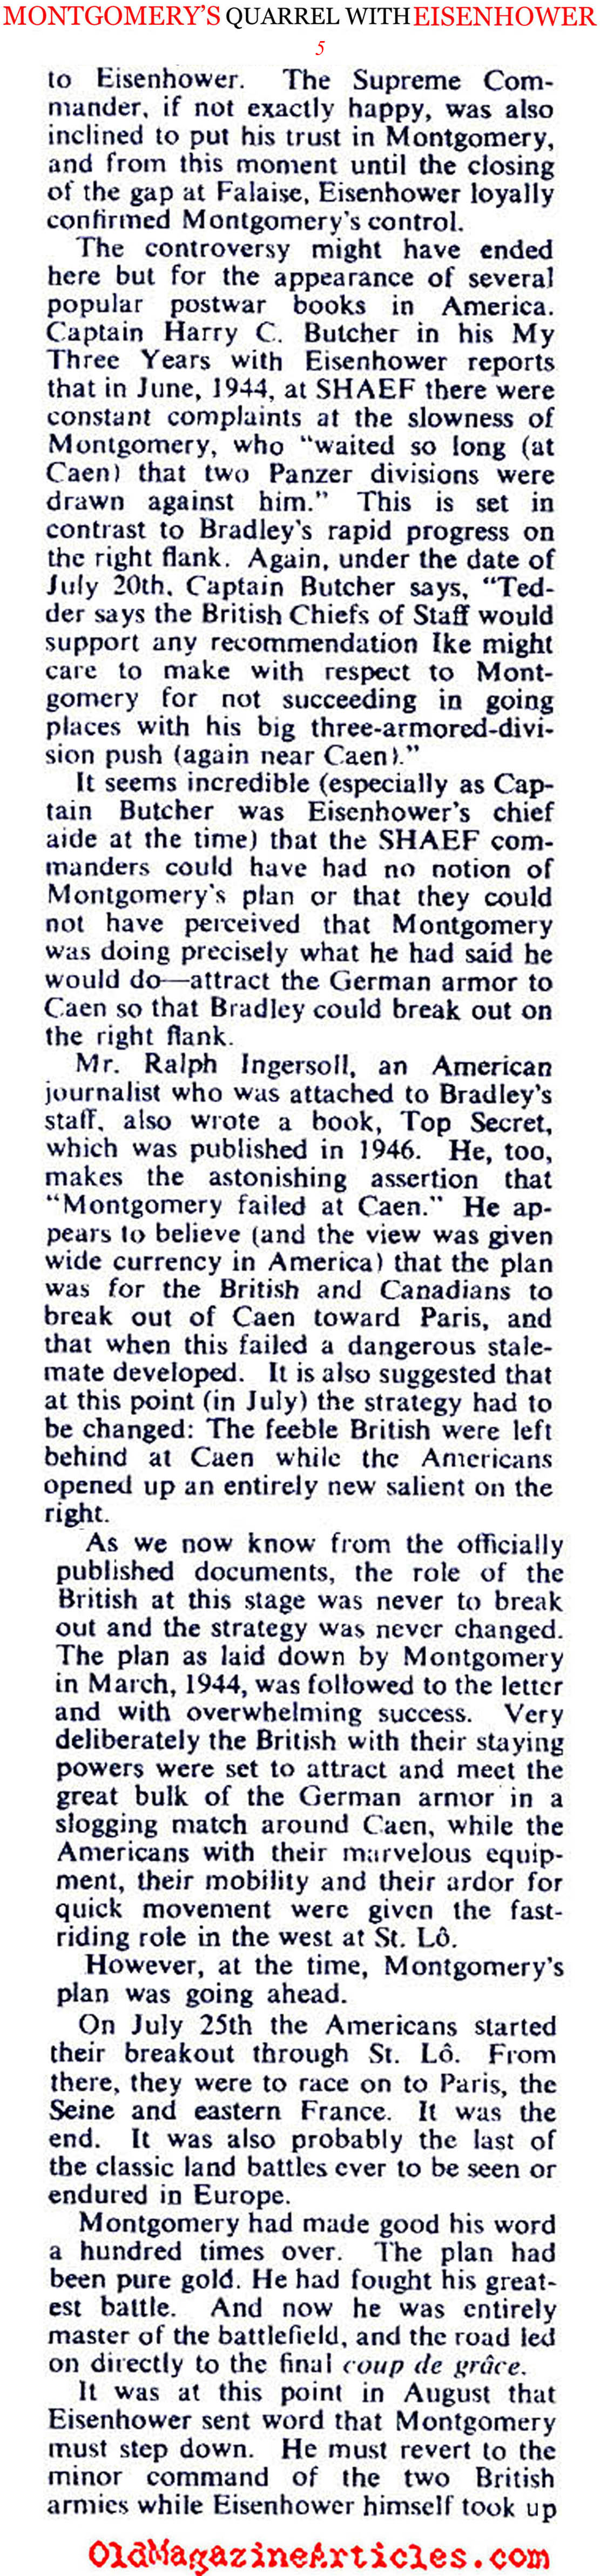 Montgomery's Quarrel with Eisenhower (Collier's Magazine, 1946)